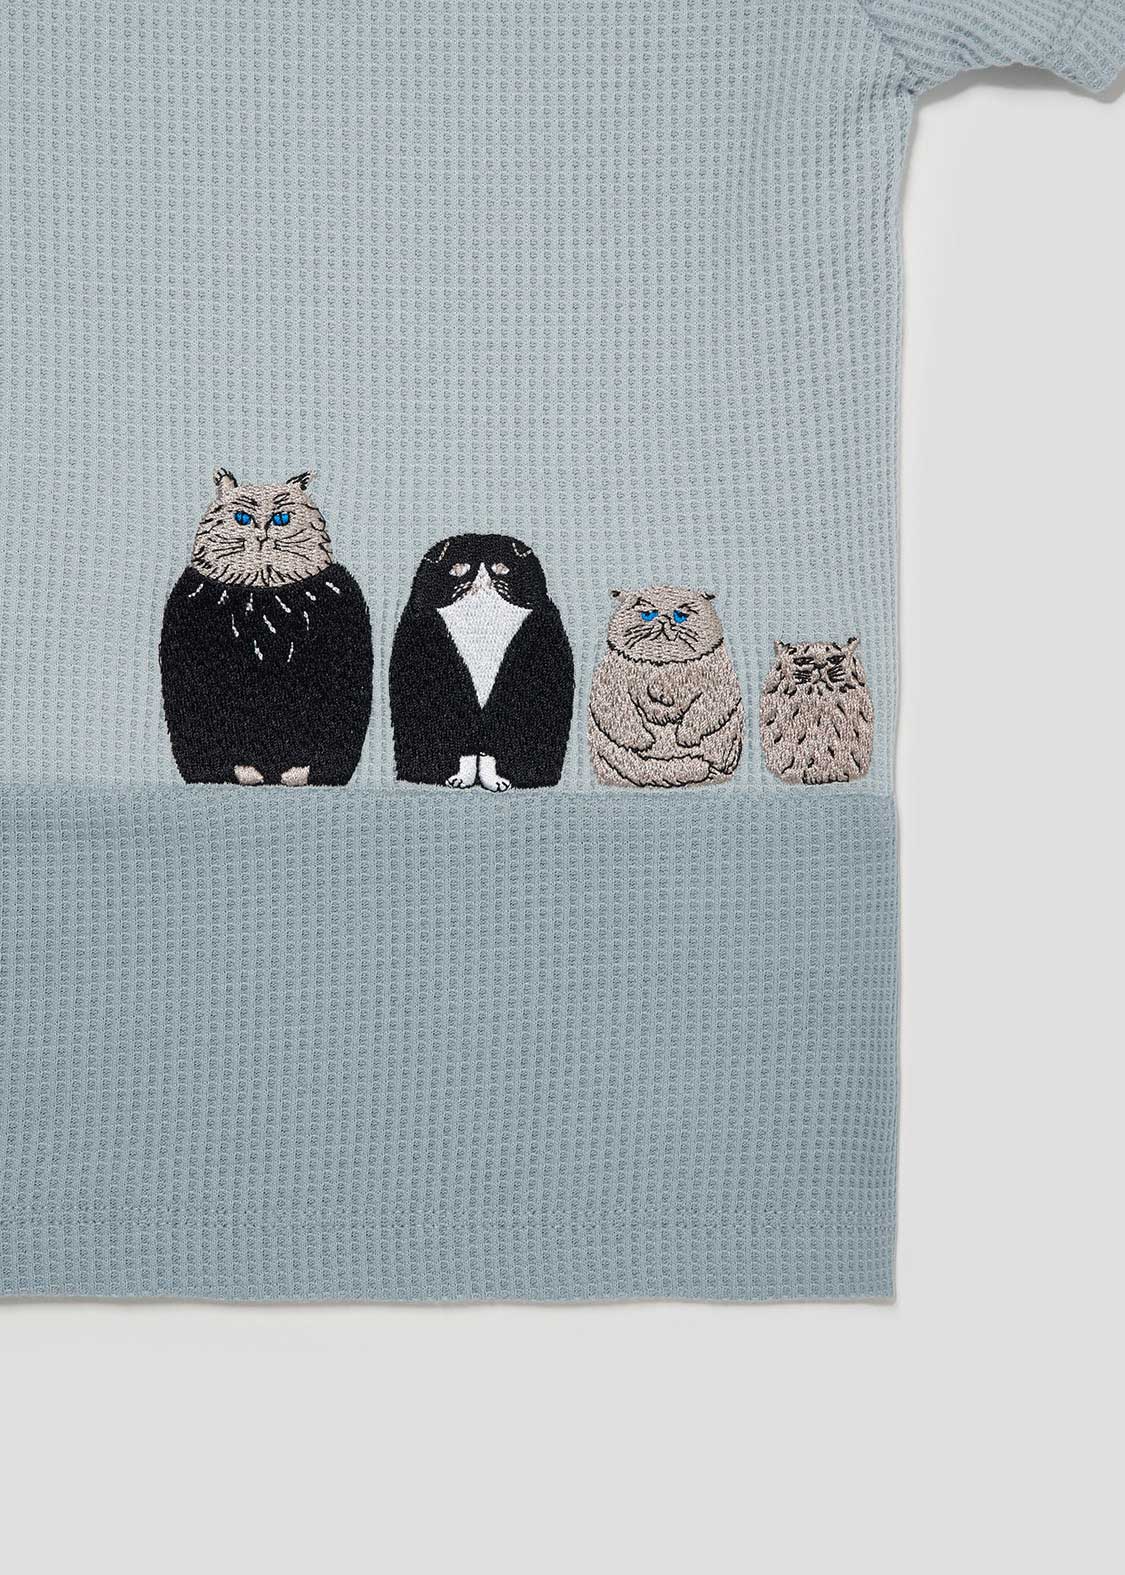 Fabric Short Sleeve Tee (Matryoshka Cat) - Kids